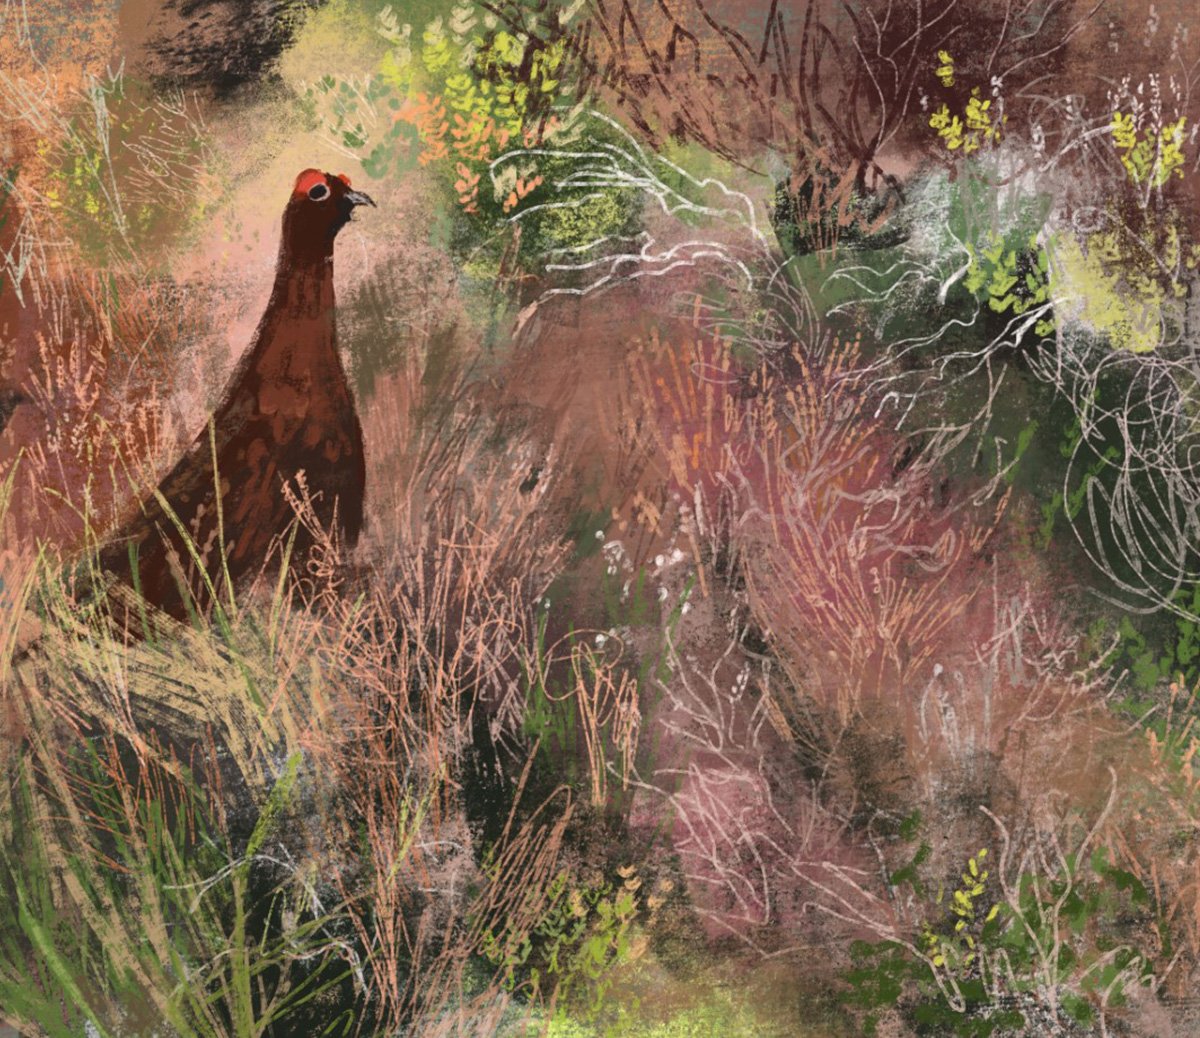 jenny-bloomfield-Ilkley-Grouse-in-grass-illustration.jpg